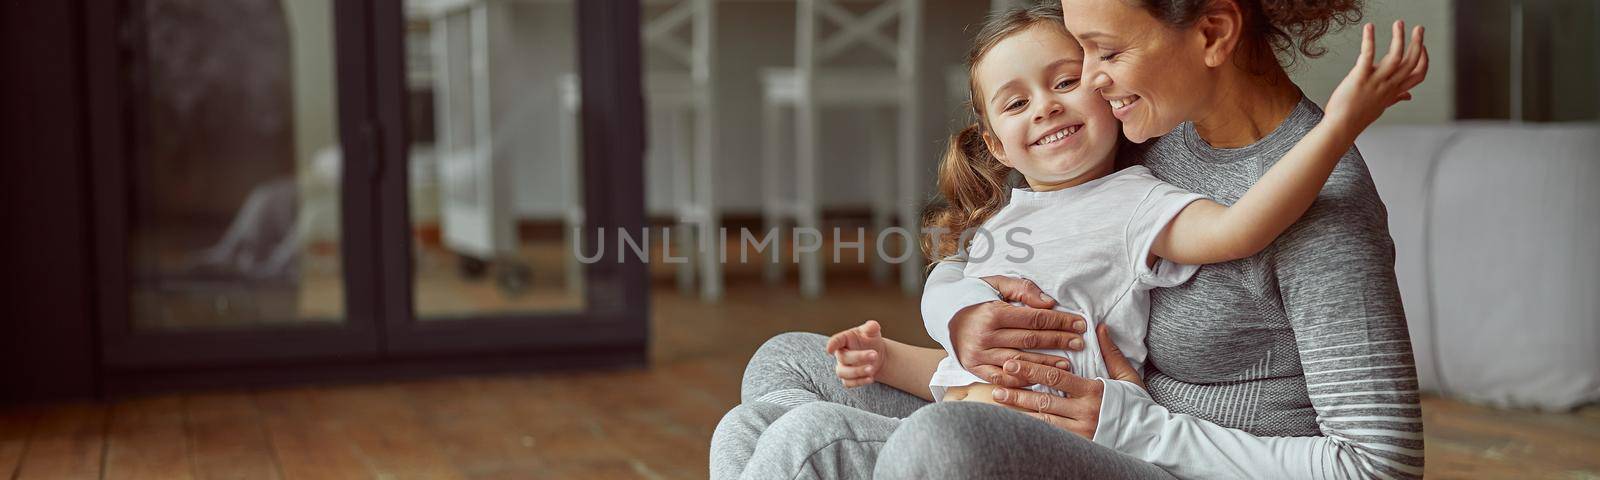 Happy woman embracing daughter on mat indoors by Yaroslav_astakhov